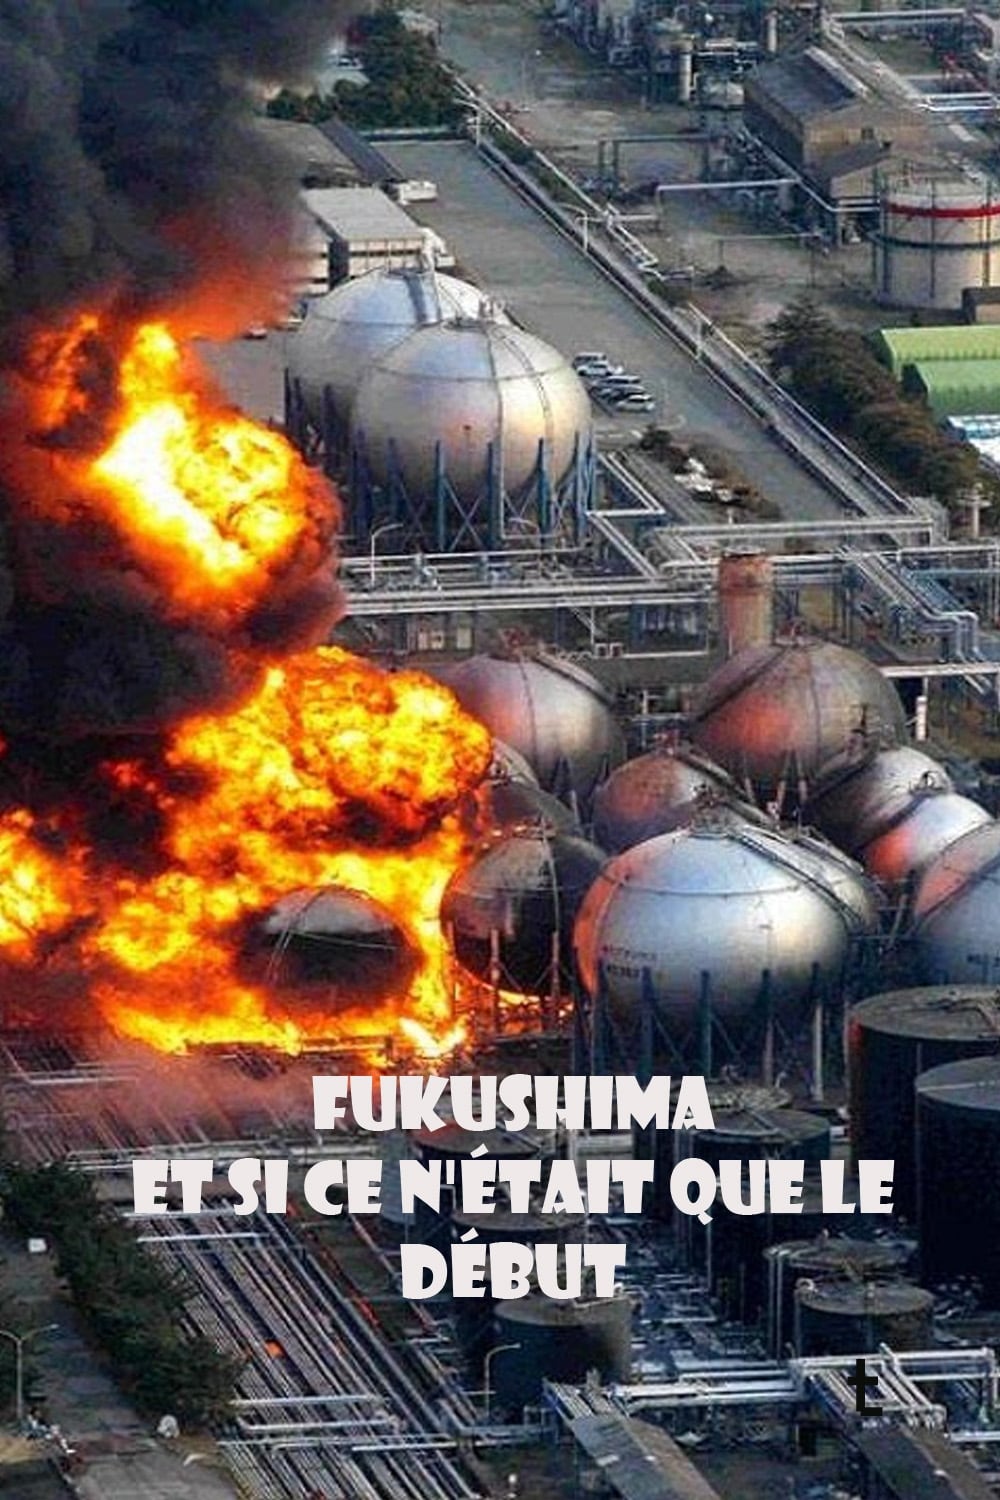 Fukushima: Is Nuclear Power Safe? (2011)